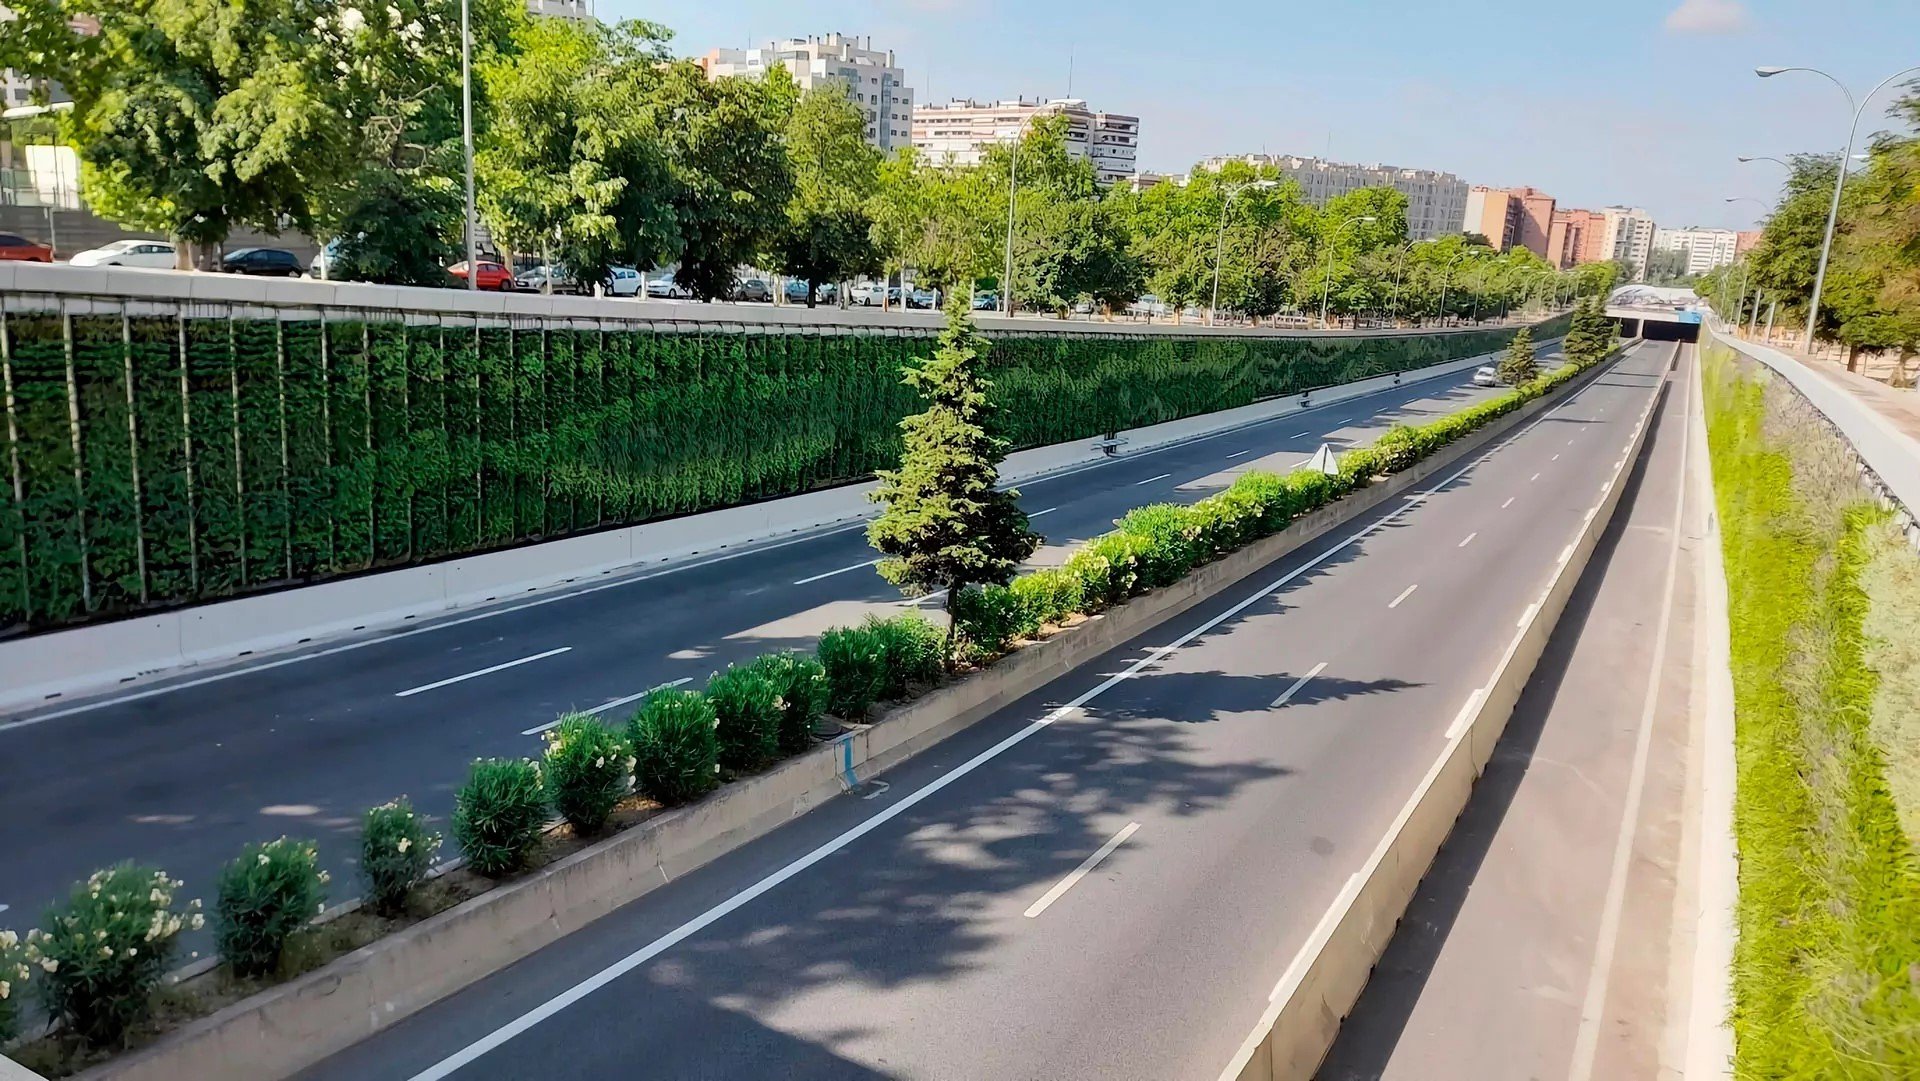 Ayesa helps design Europe's largest vertical garden, delivering green infrastructure that combats pollutants